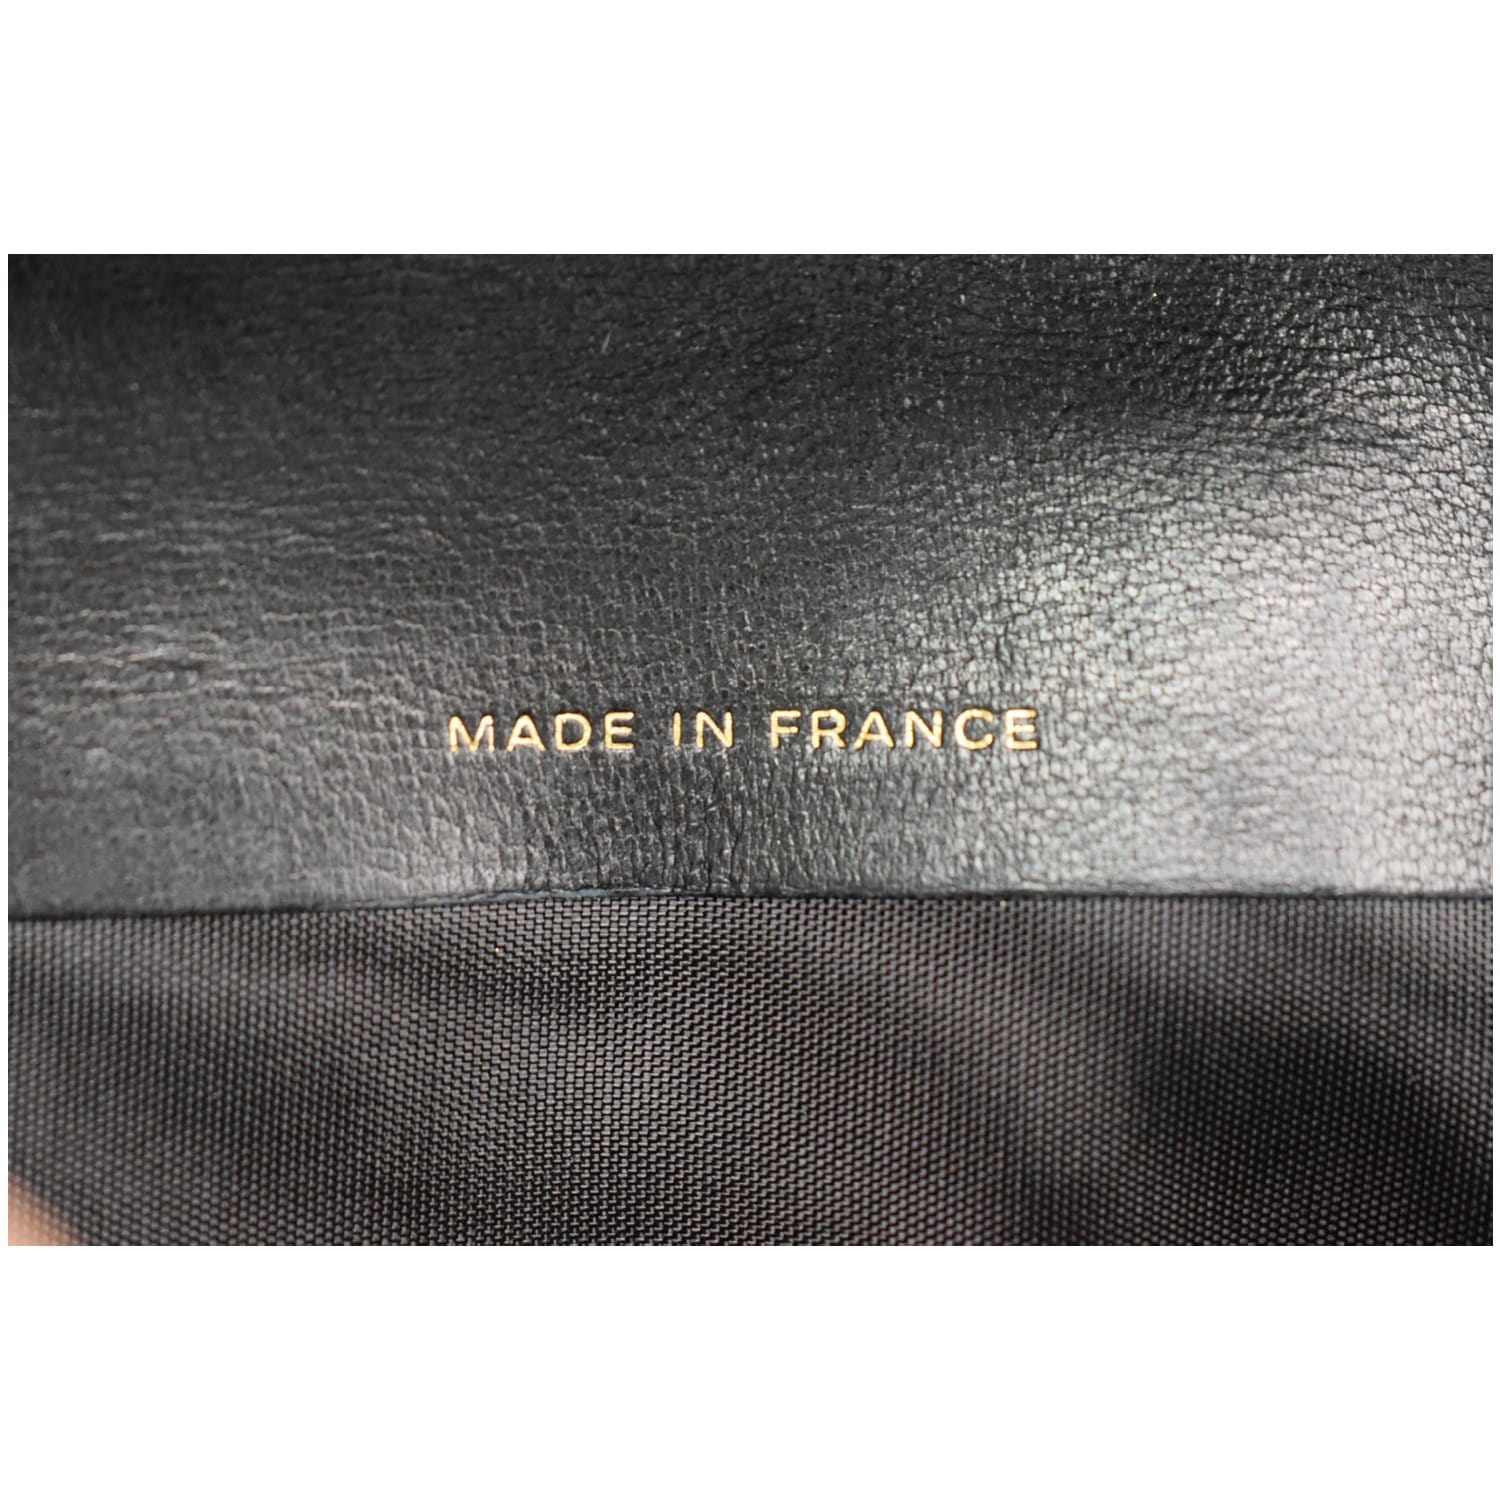 CHANEL Classic Black Caviar Leather Big CC Bi Fold Long Wallet  Card/Bill/Coin - My Dreamz Closet